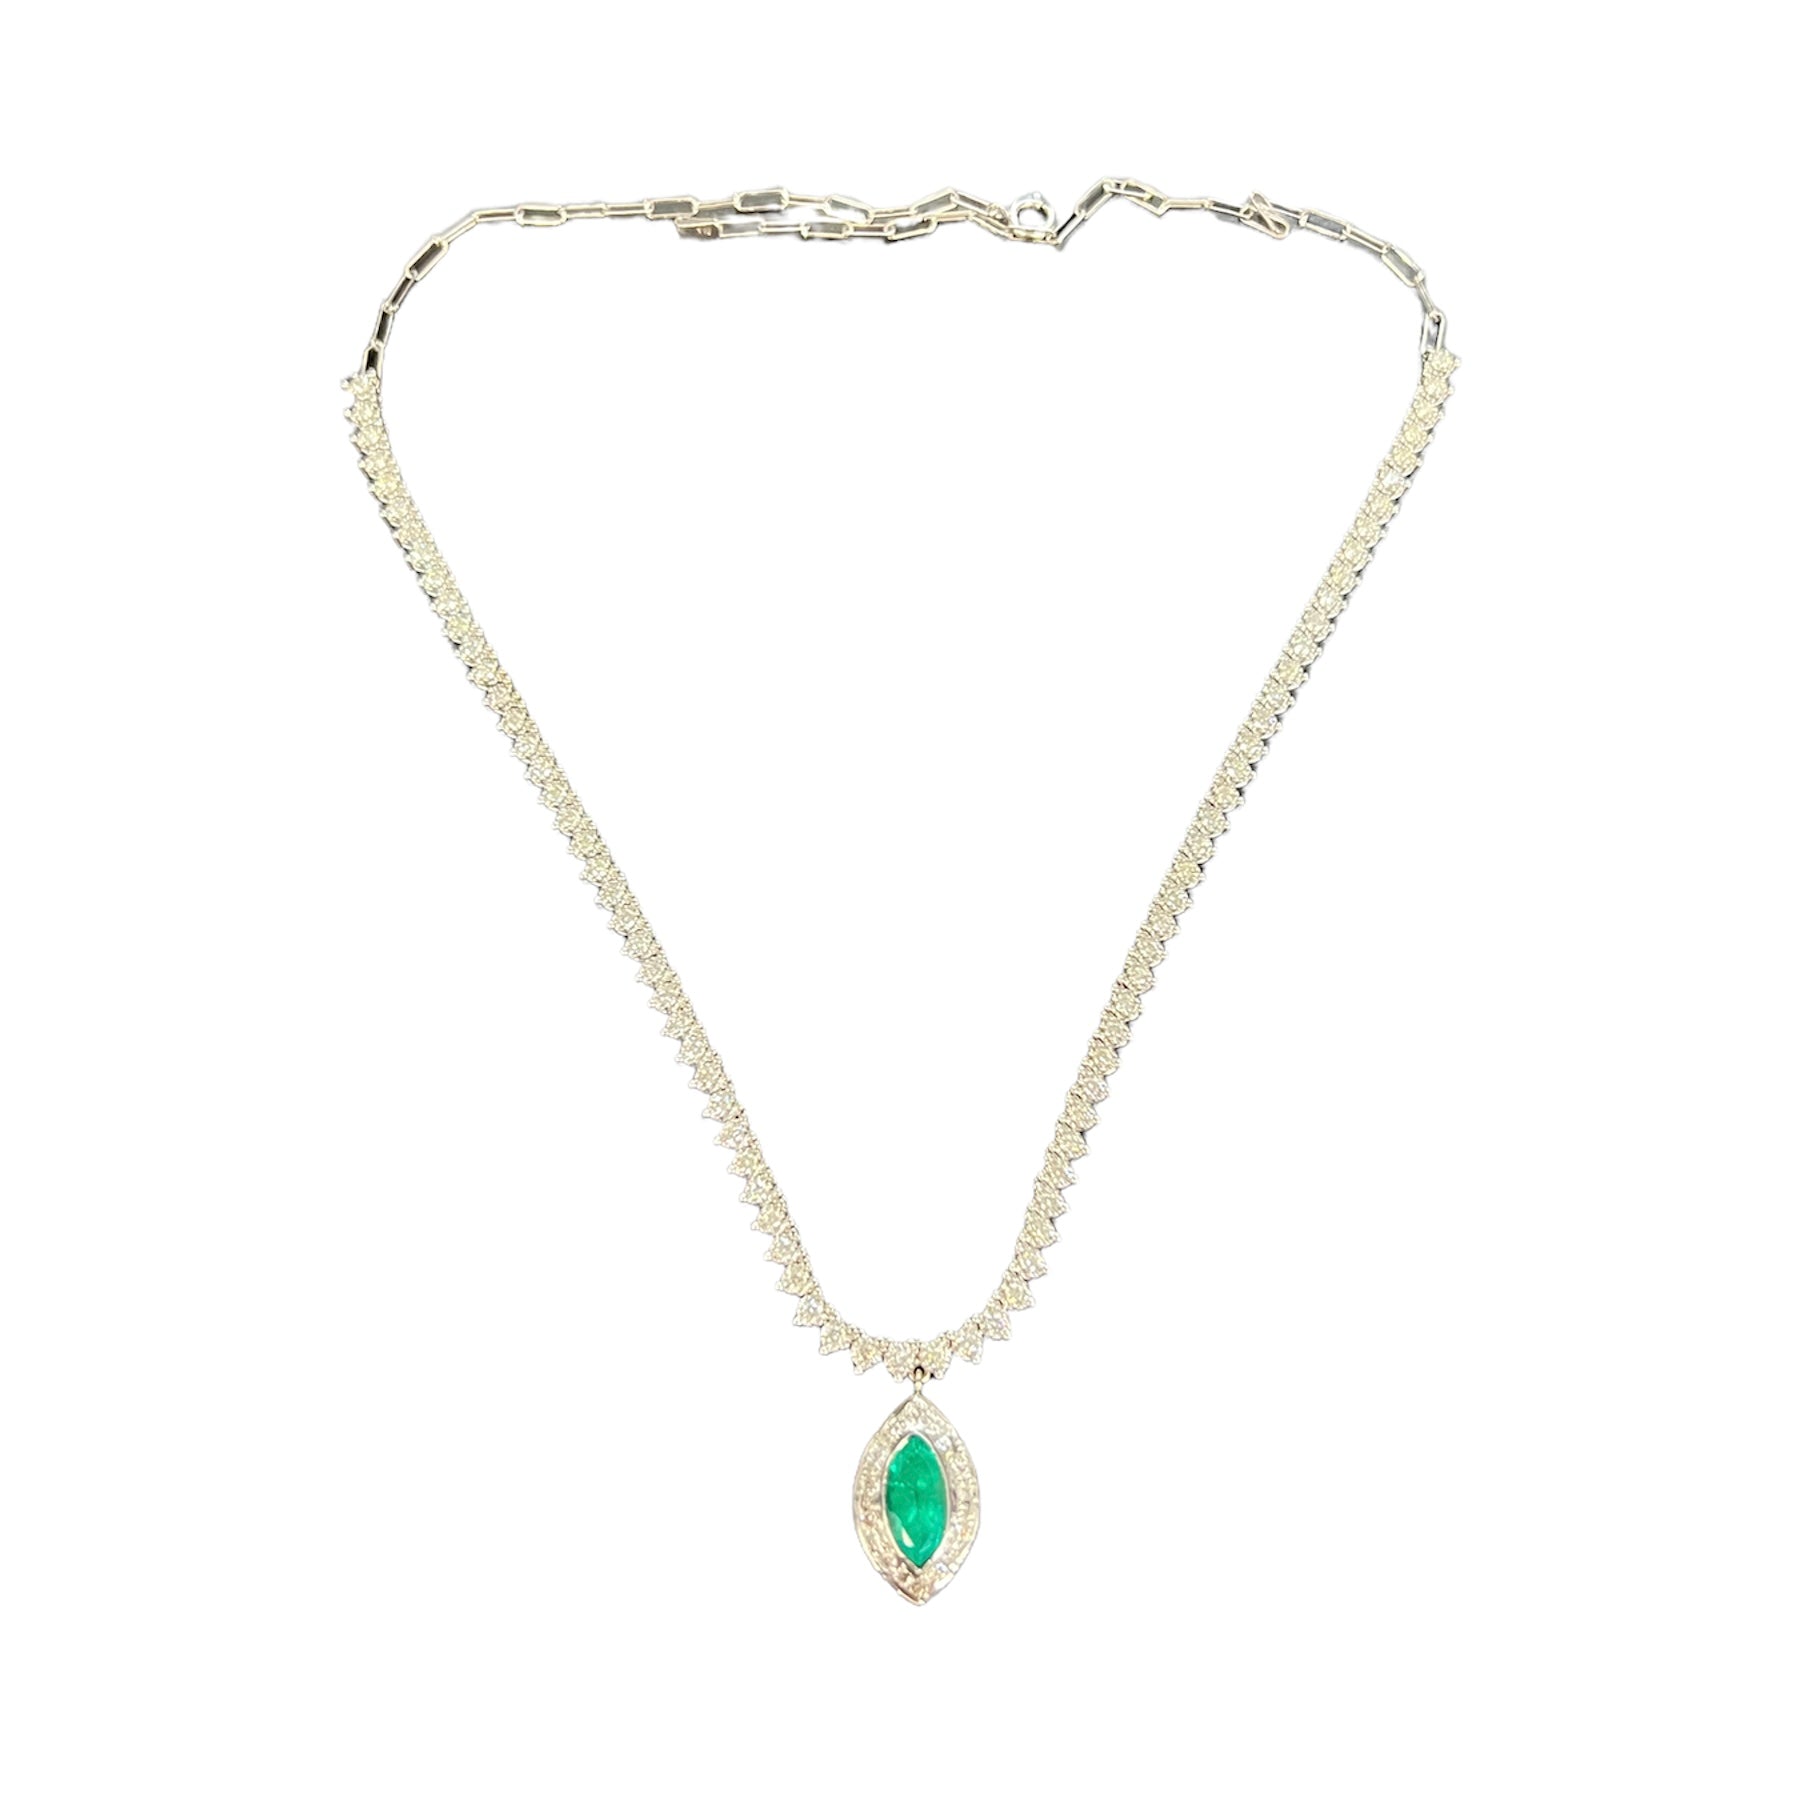 2.3CTw Diamond Tennis Marquise Emerald Pendant Necklace 14K White Gold 18”